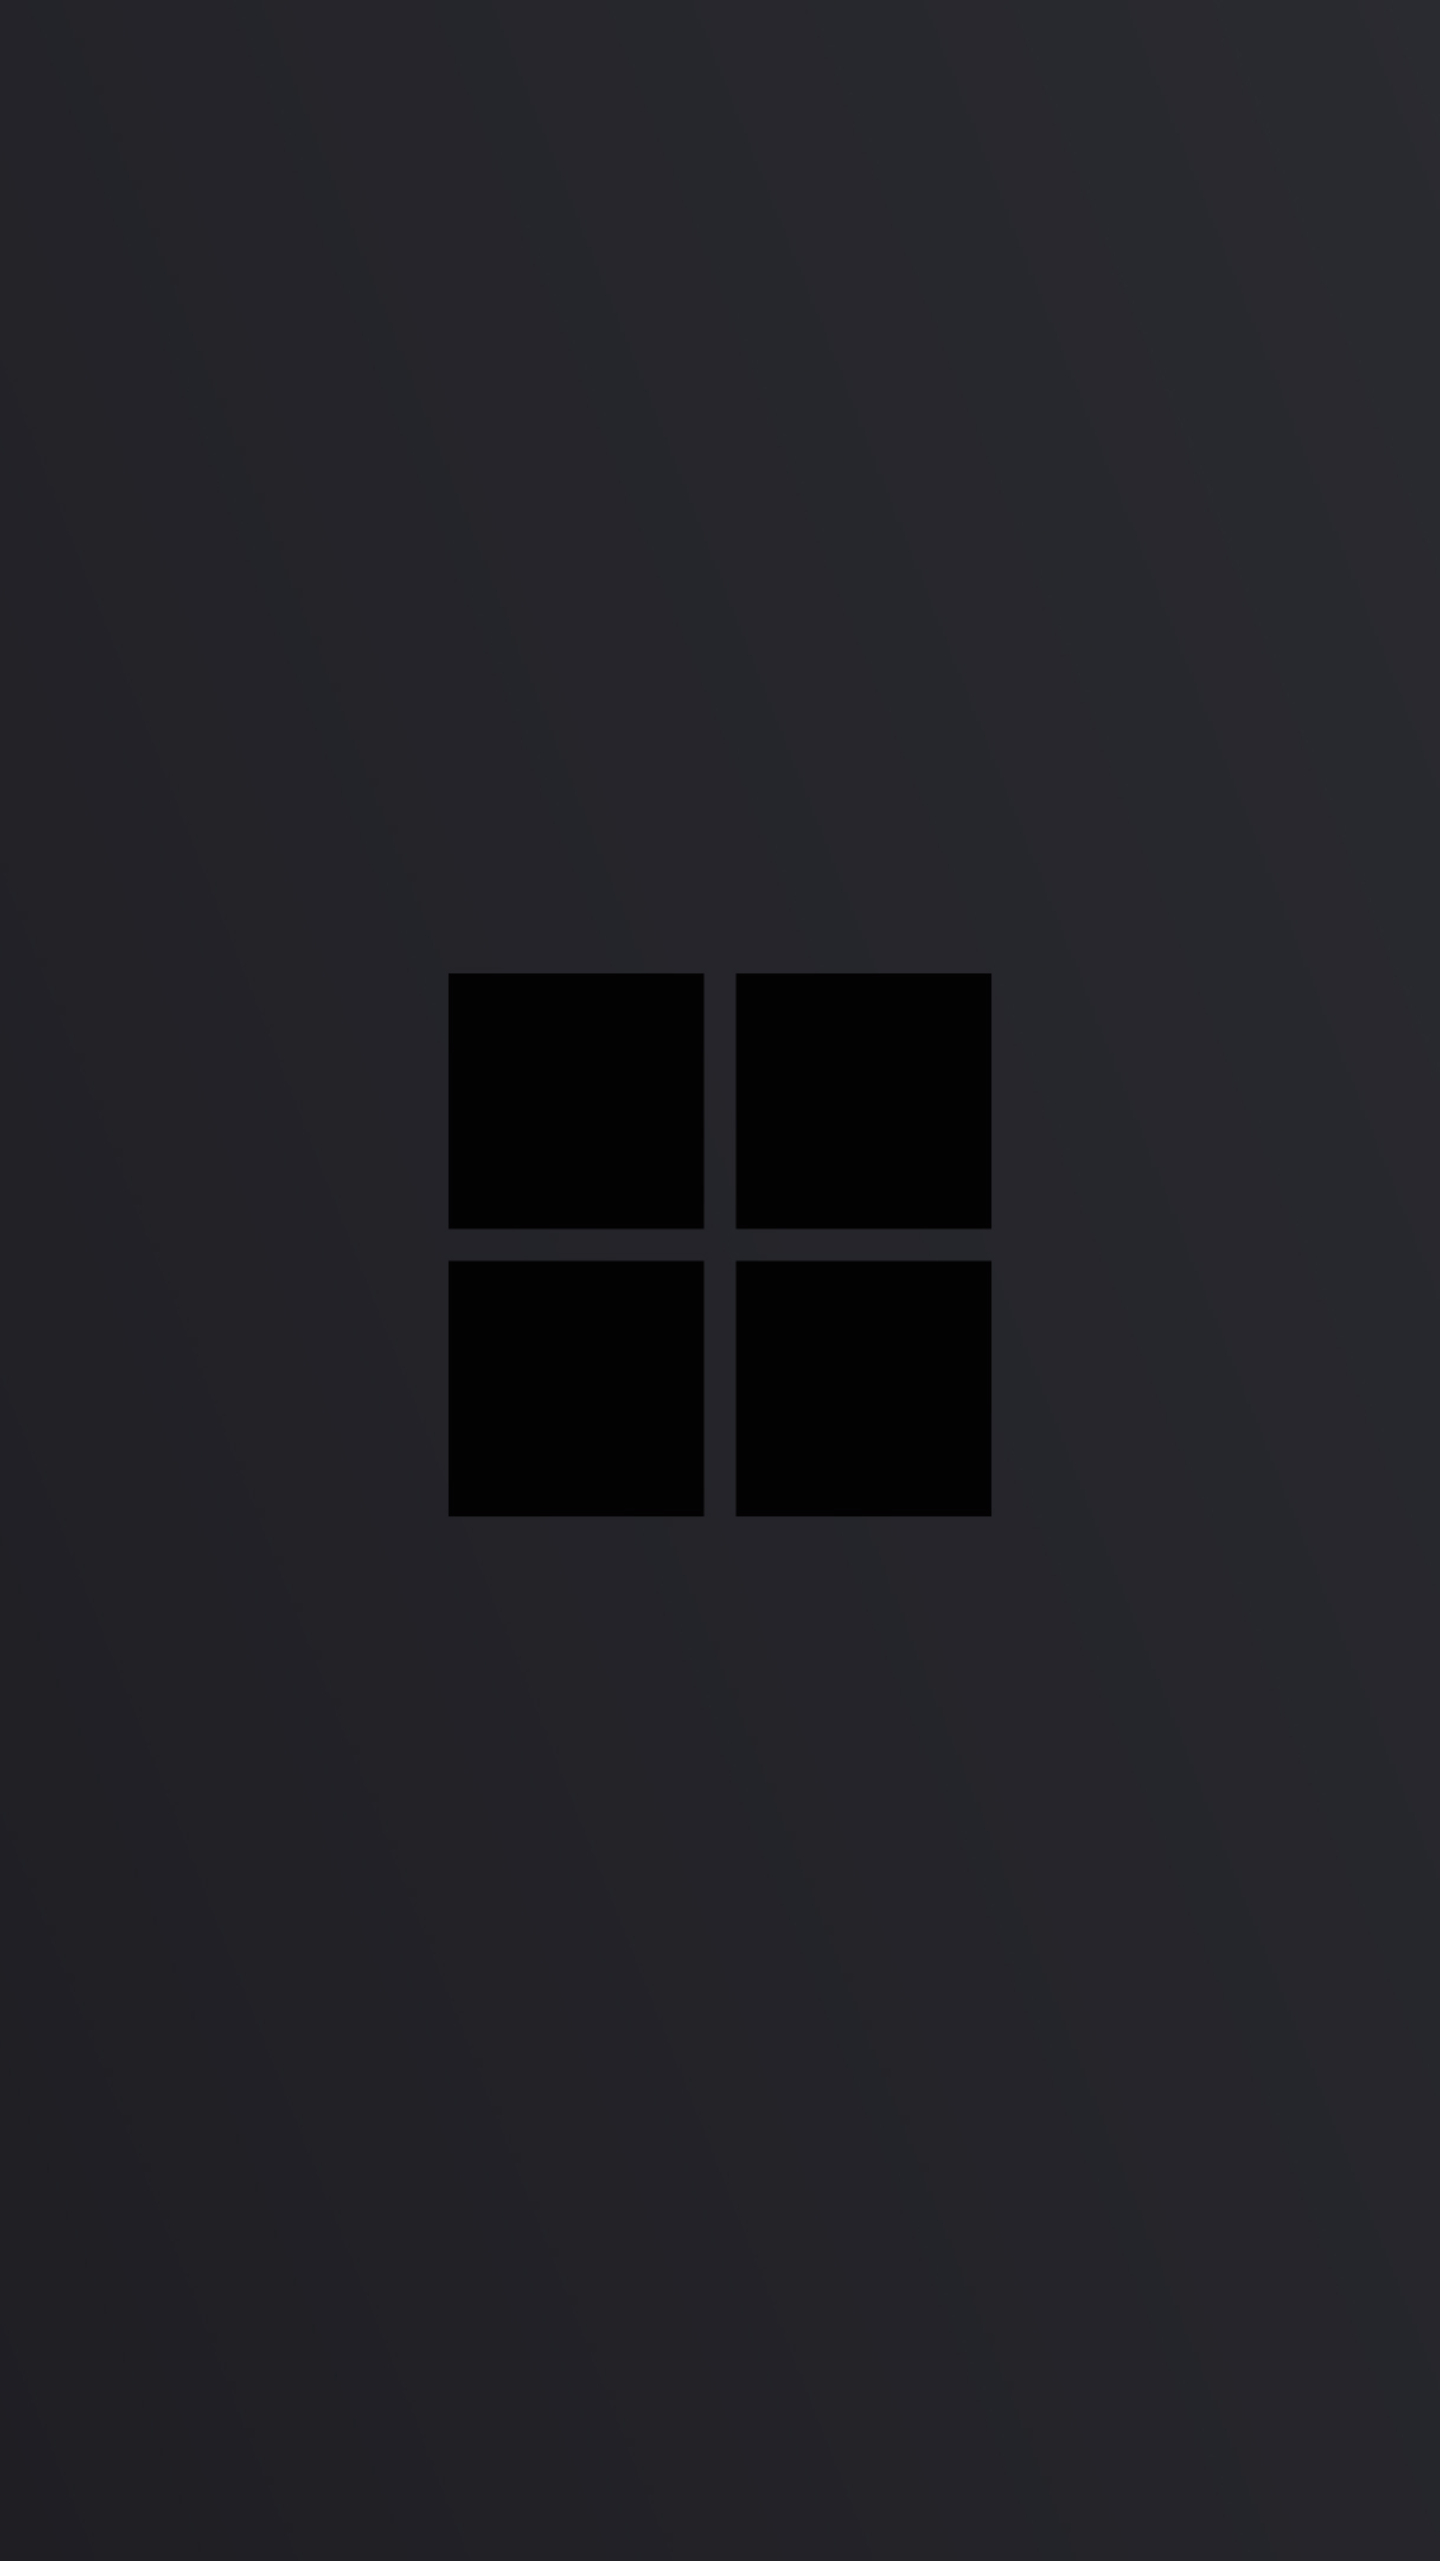 1440x2561 Windows 10 Logo Minimal Dark 1440x2561 Resolution Wallpaper, HD  Minimalist 4K Wallpapers, Images, Photos and Background - Wallpapers Den